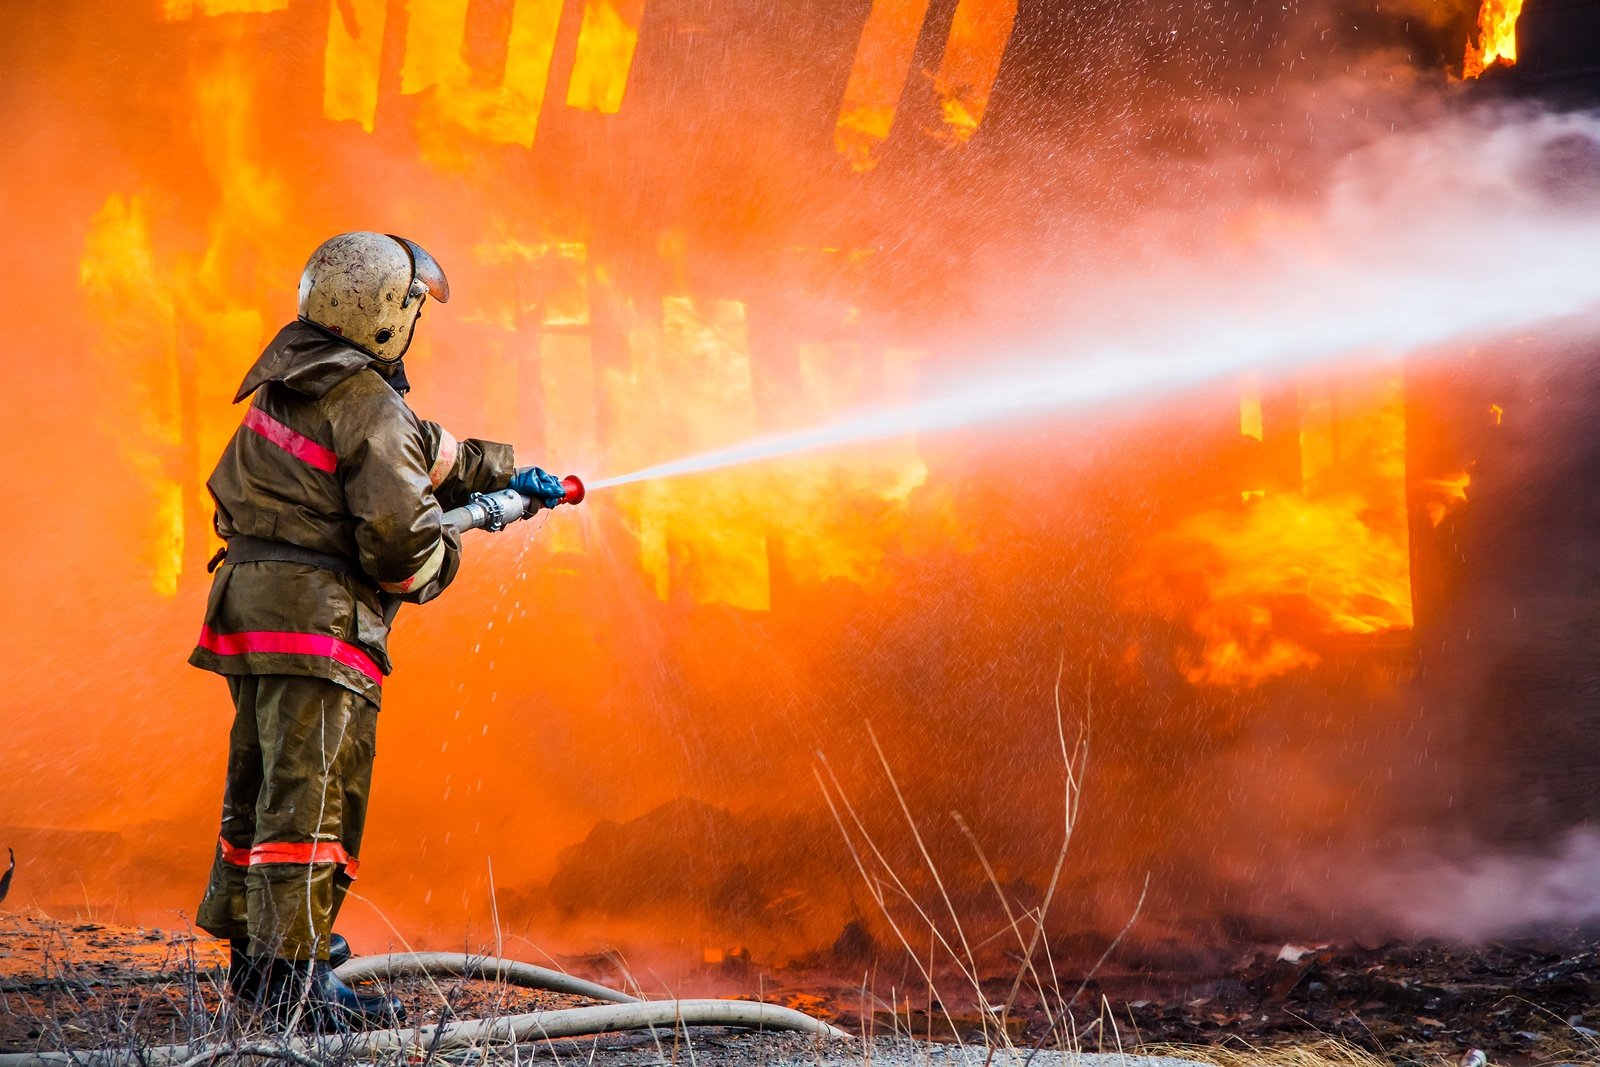 bigstock-Fireman-Extinguishes-A-Fire-91114982.jpg